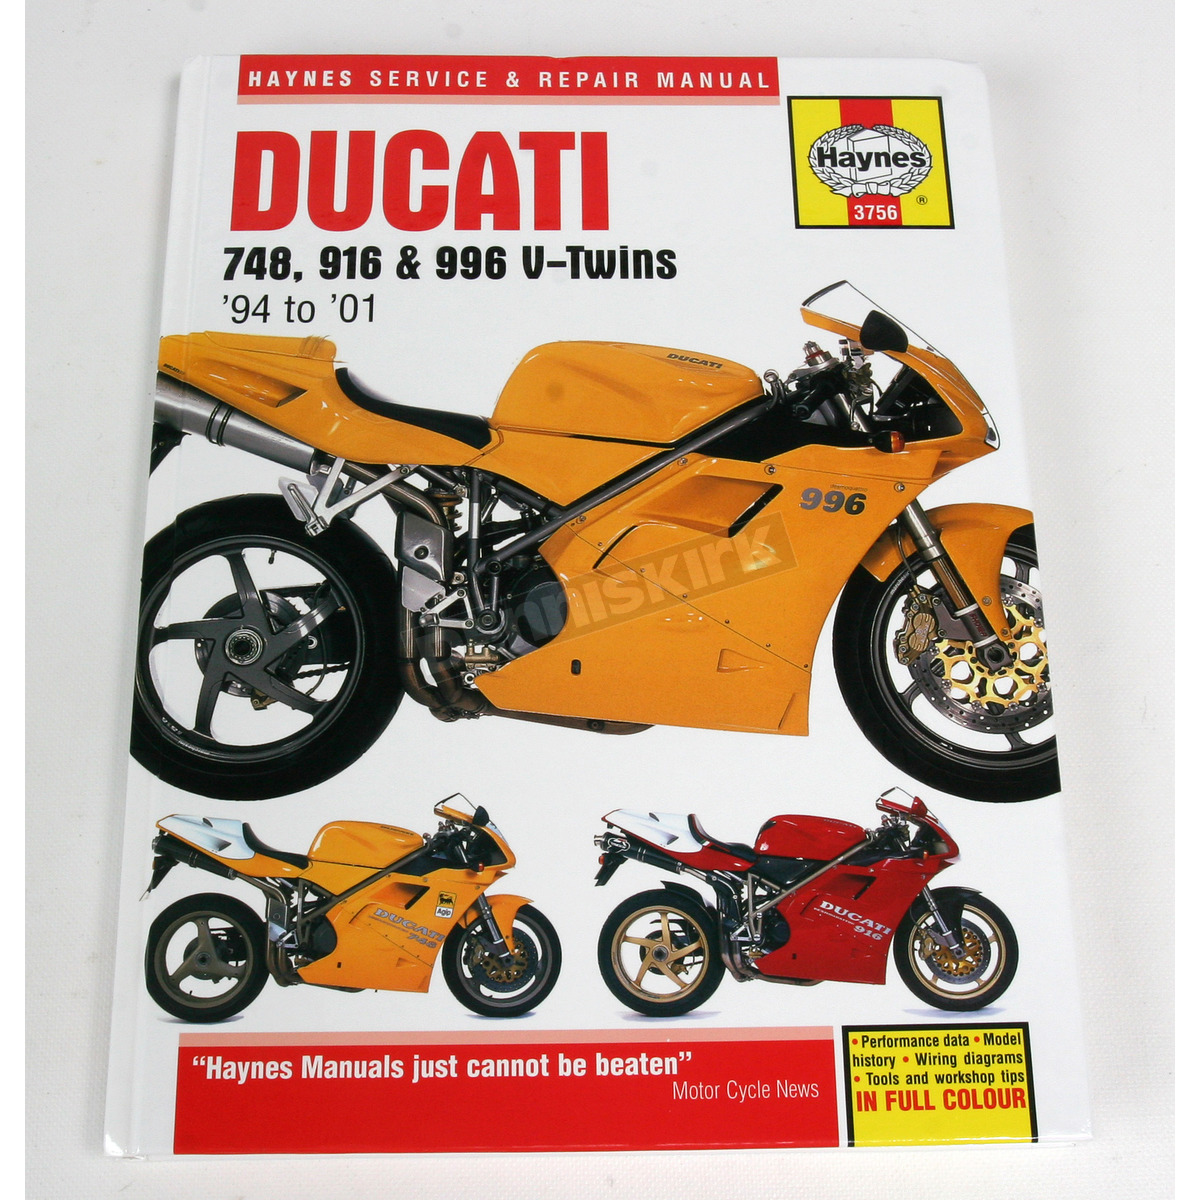 Ducati 996 Wiring Diagram - Wiring Schema Collection